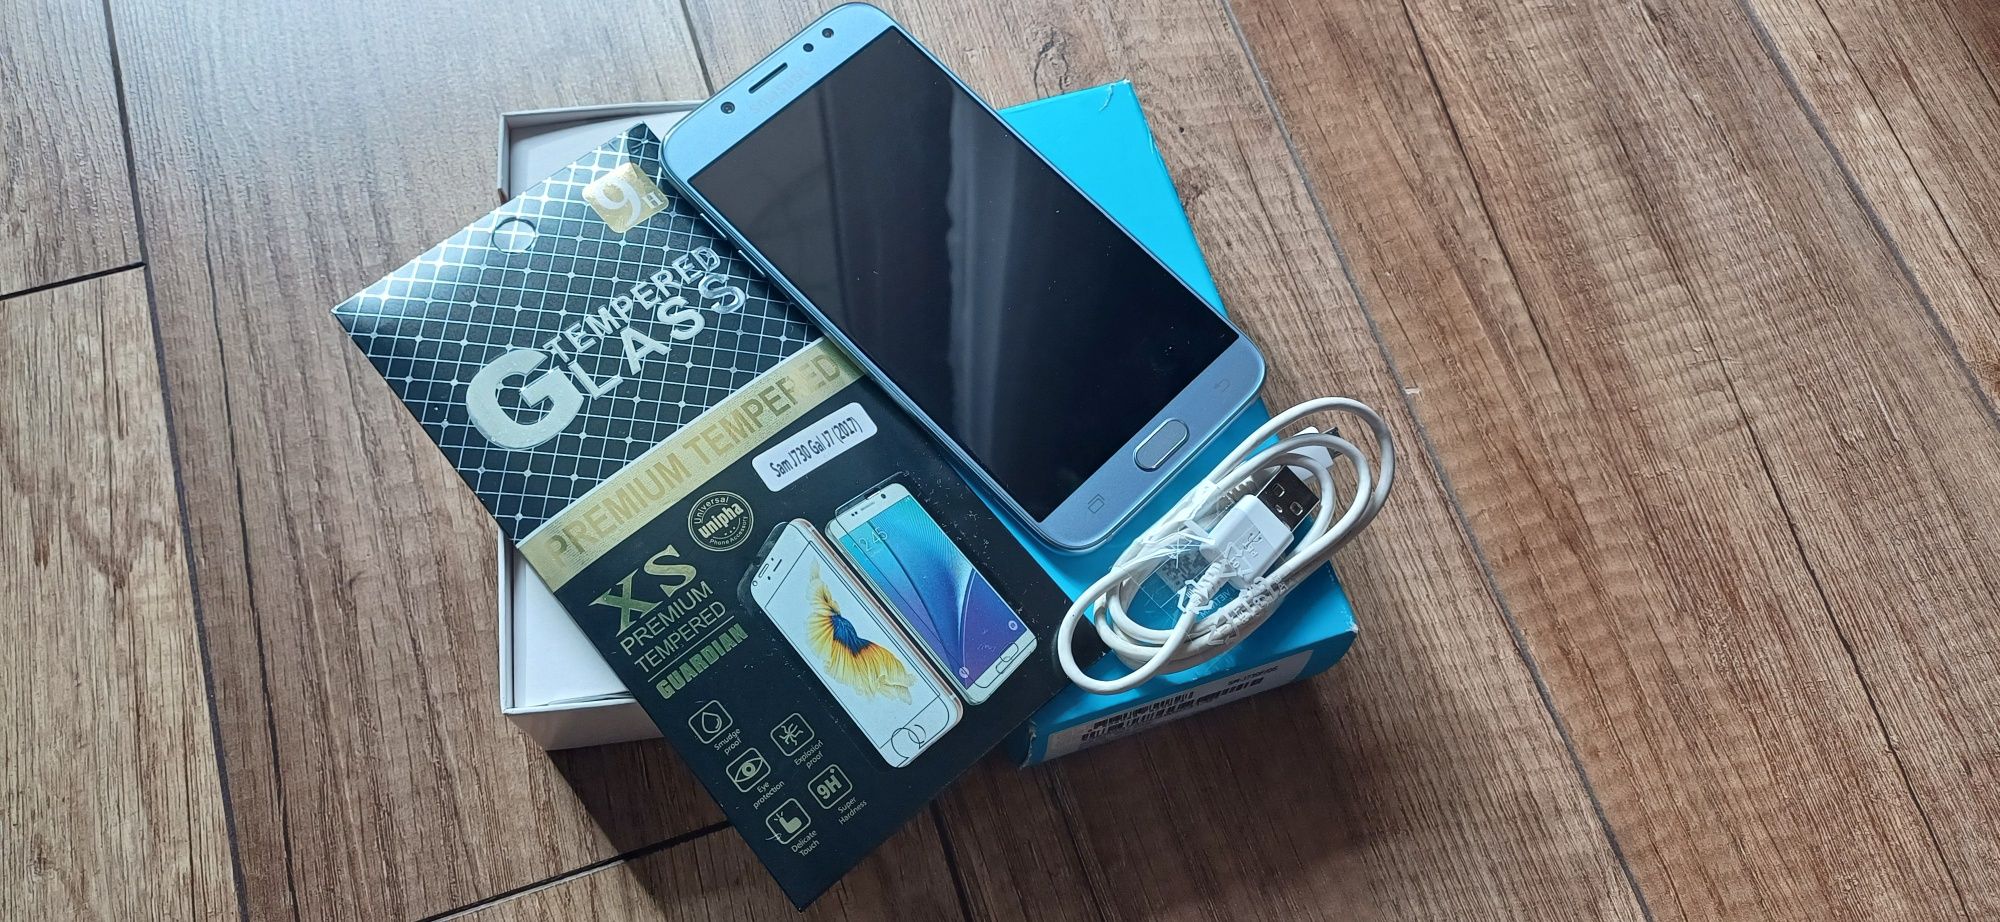 Samsung Galaxy J7 2017 niebieski Dual SIM